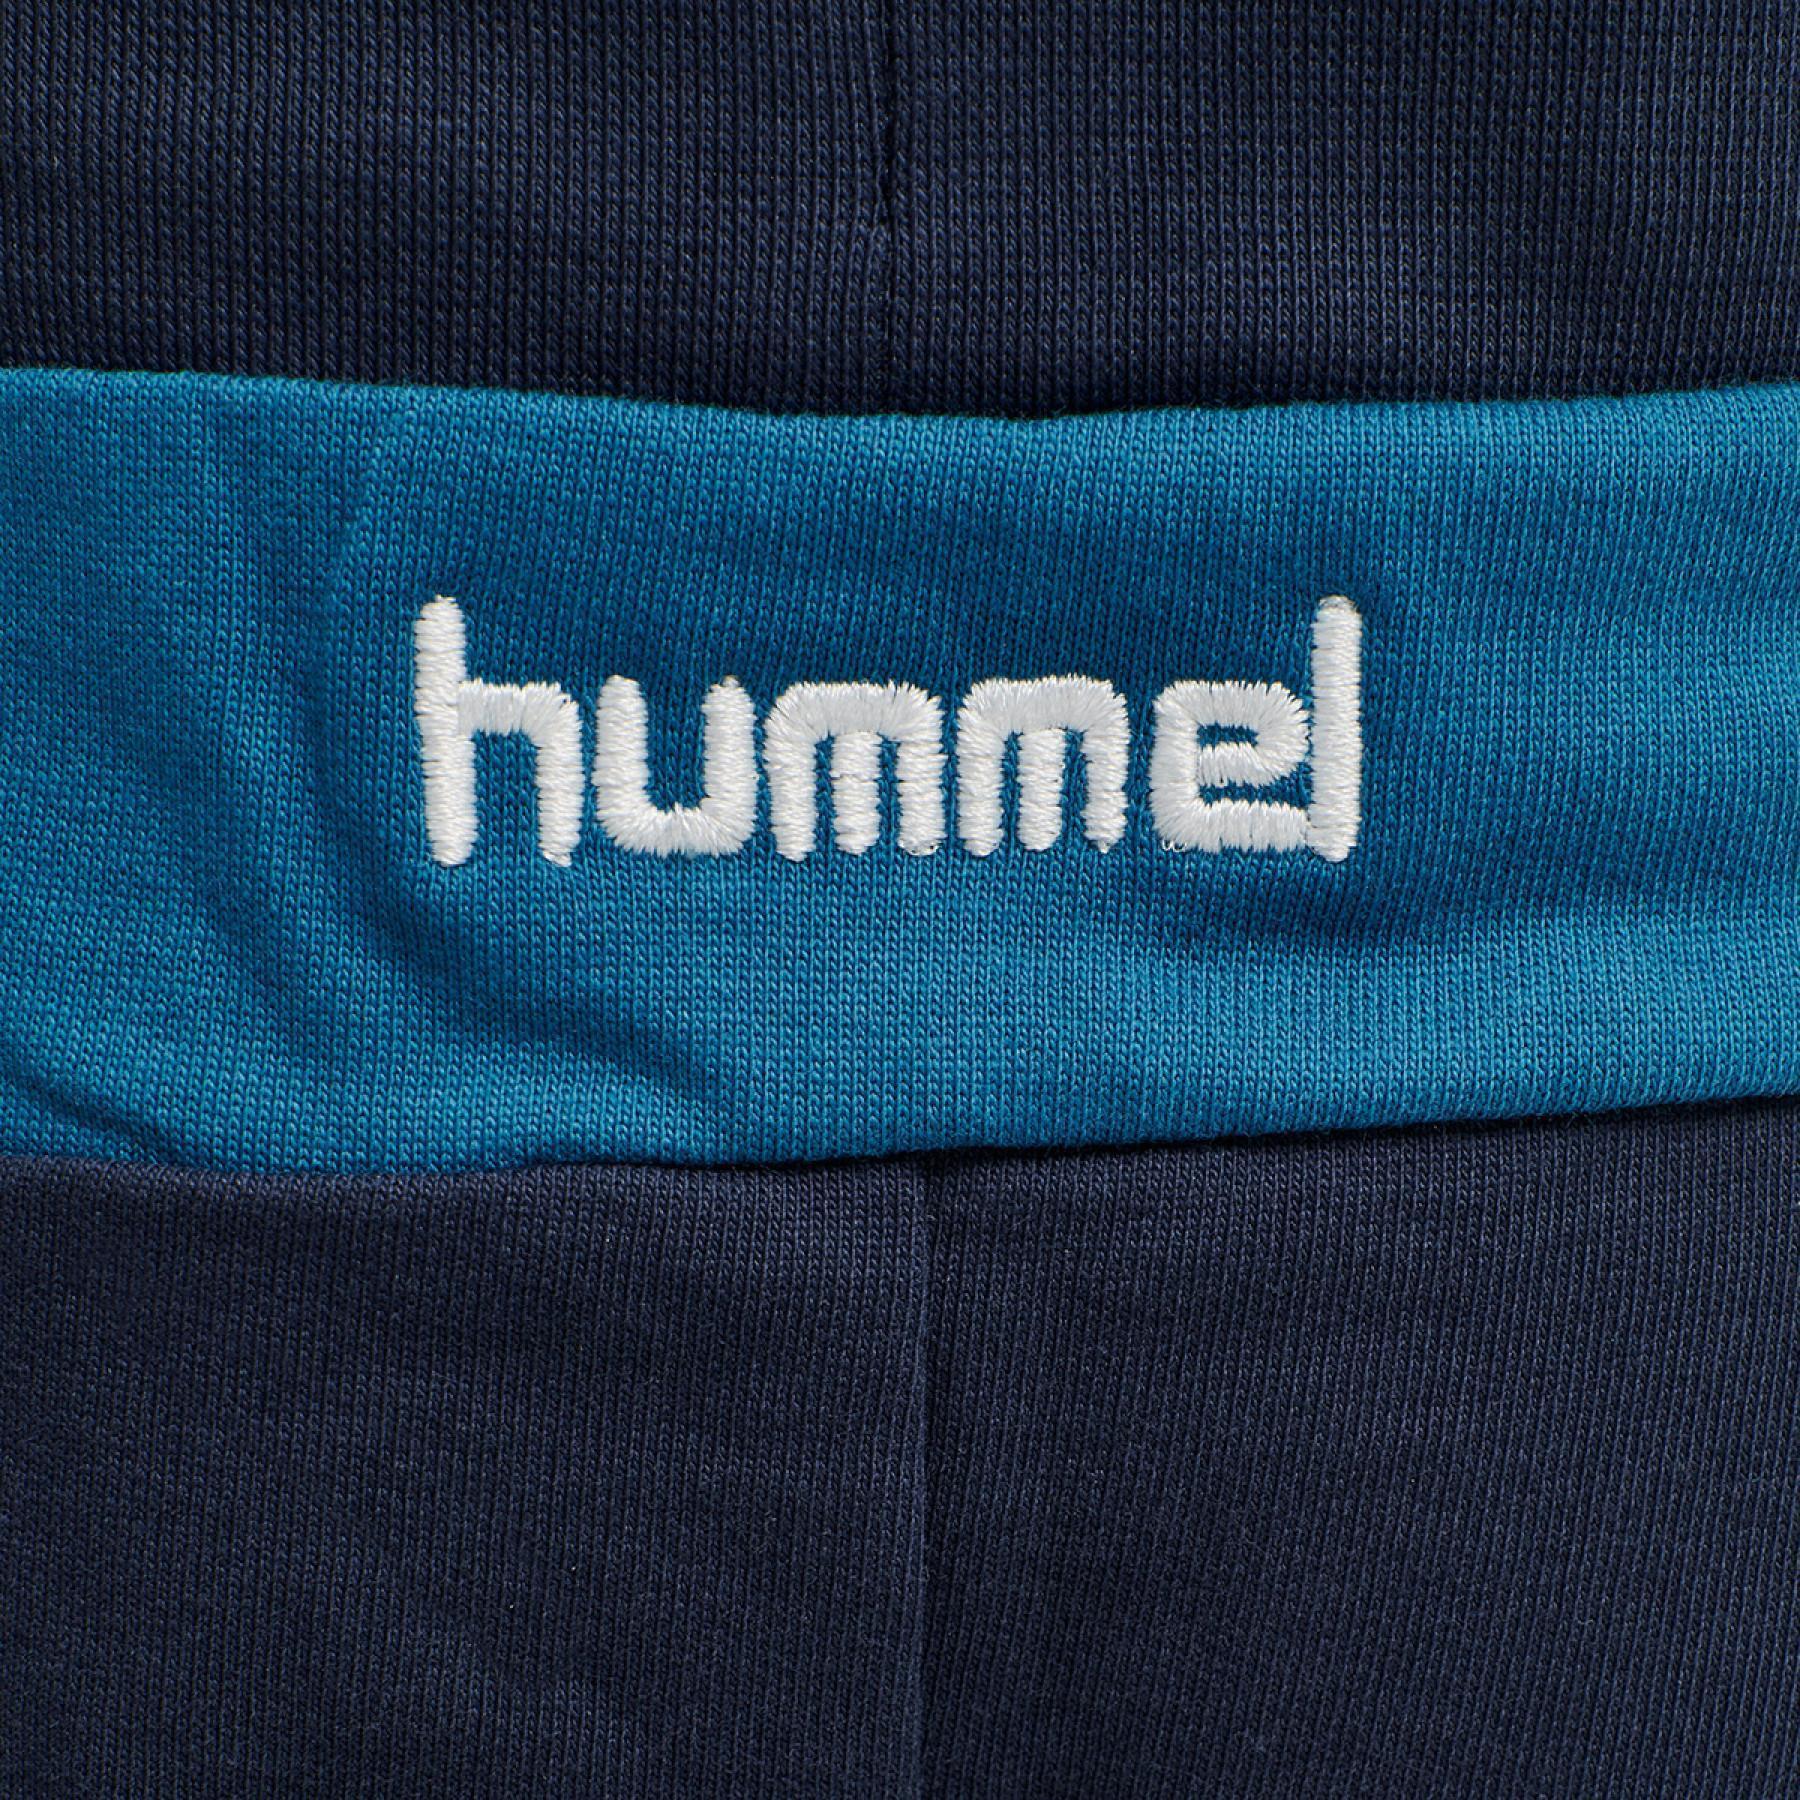 Pantalones para niños Hummel hmlnigel